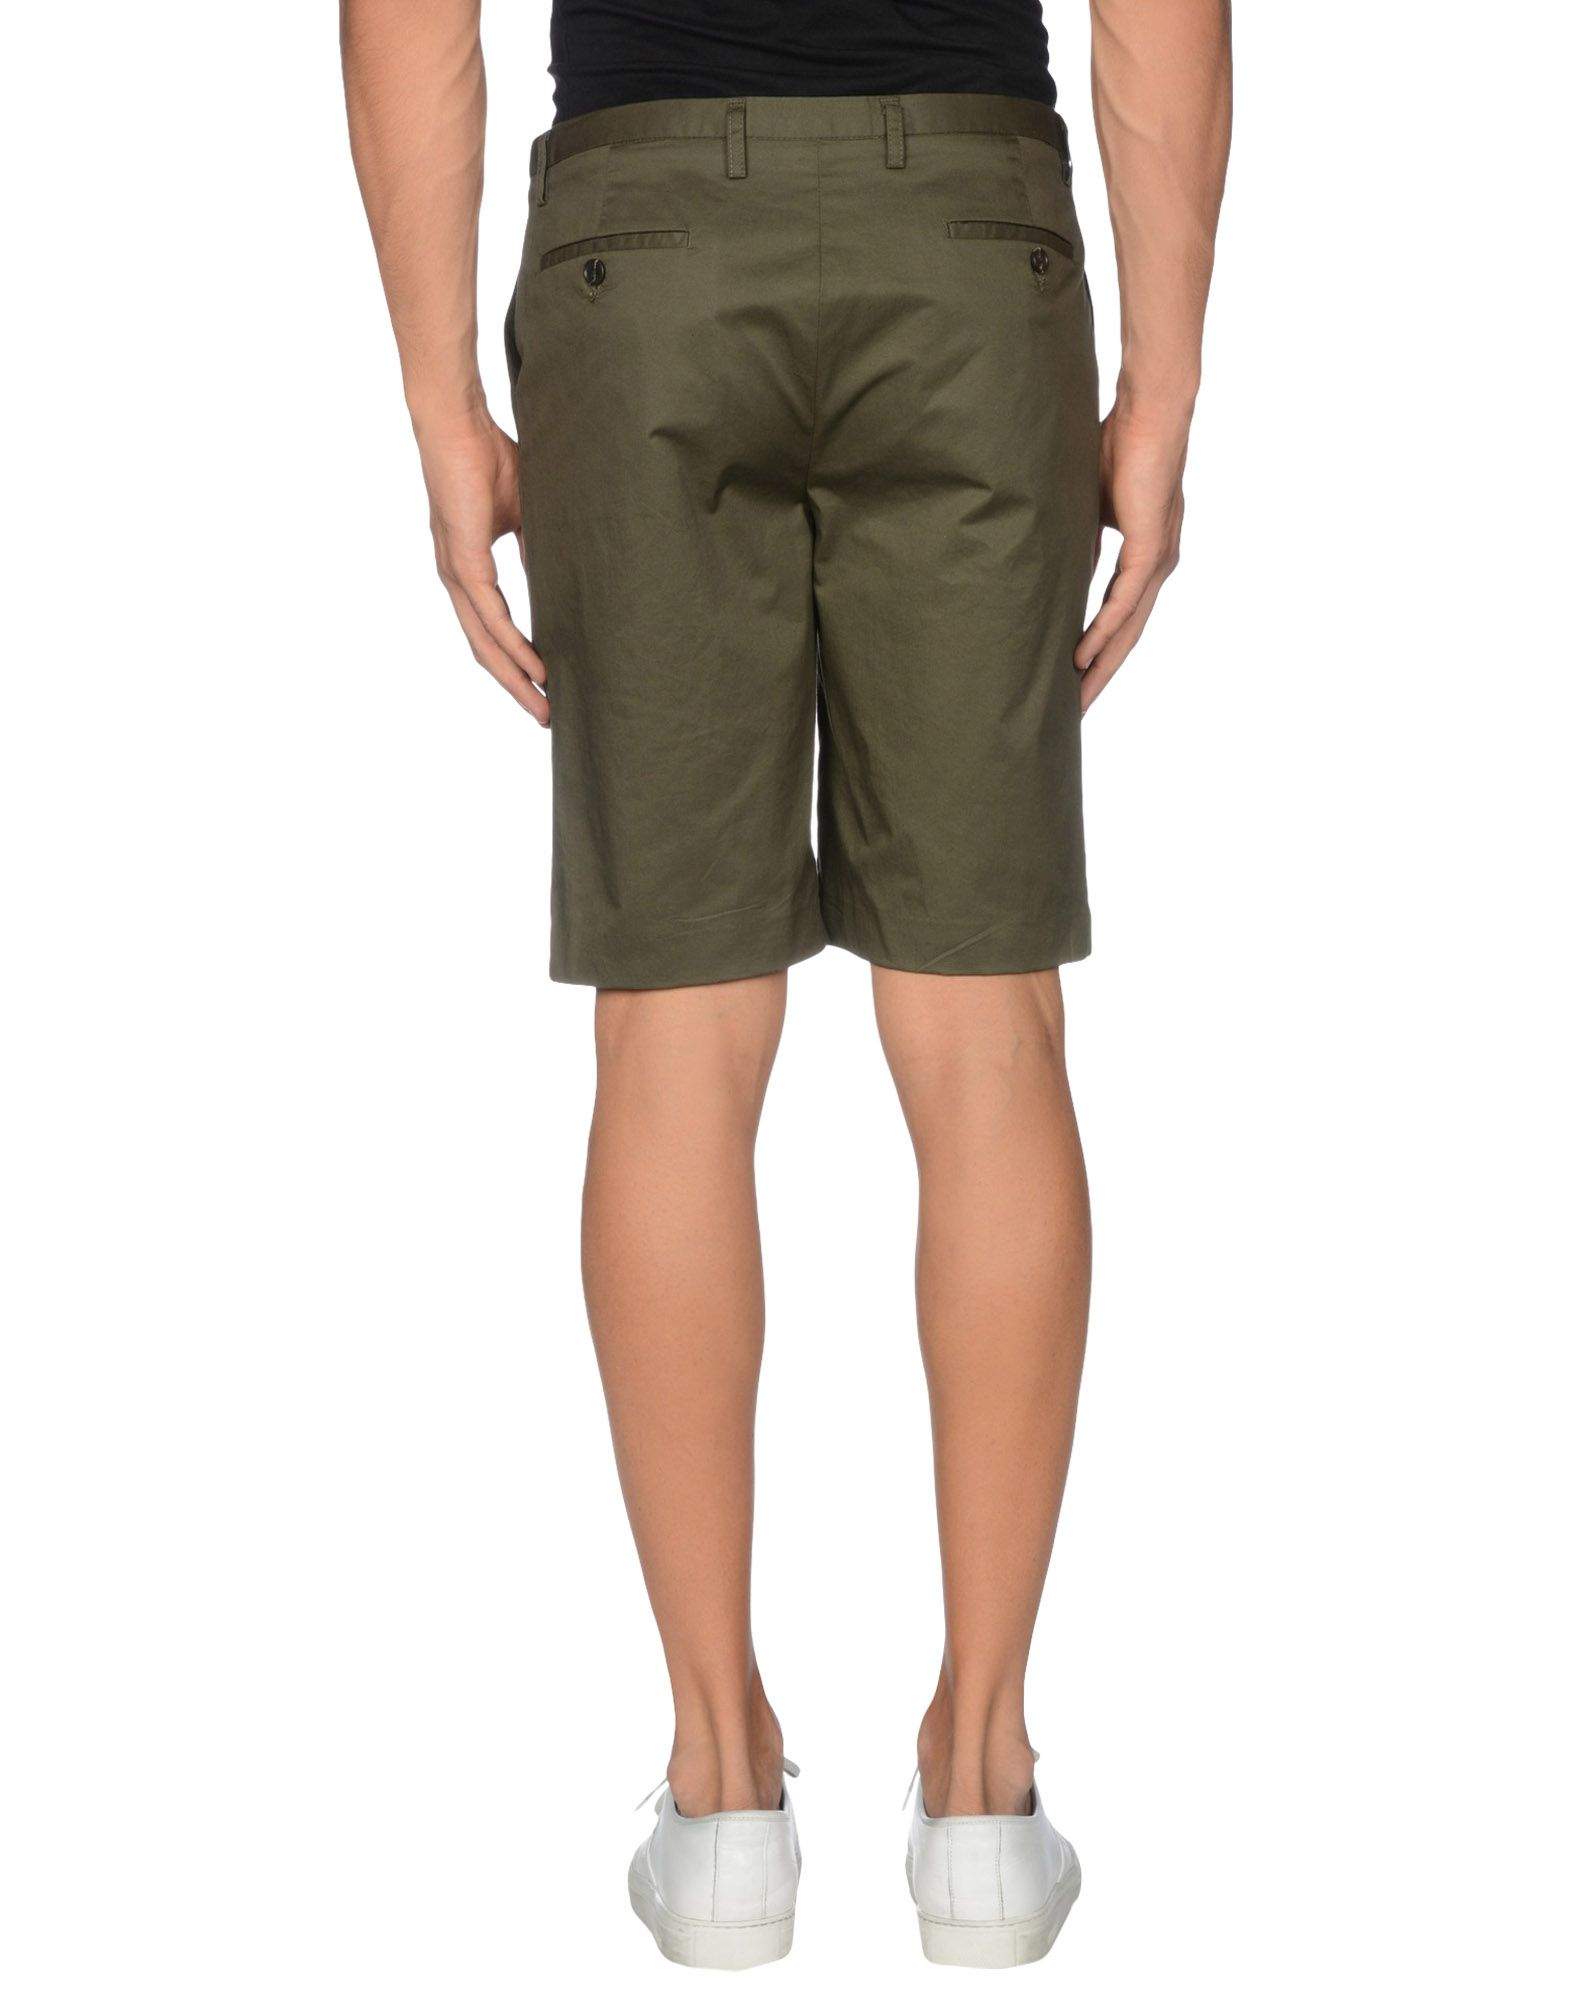 Lyst - Michael Kors Bermuda Shorts in Green for Men